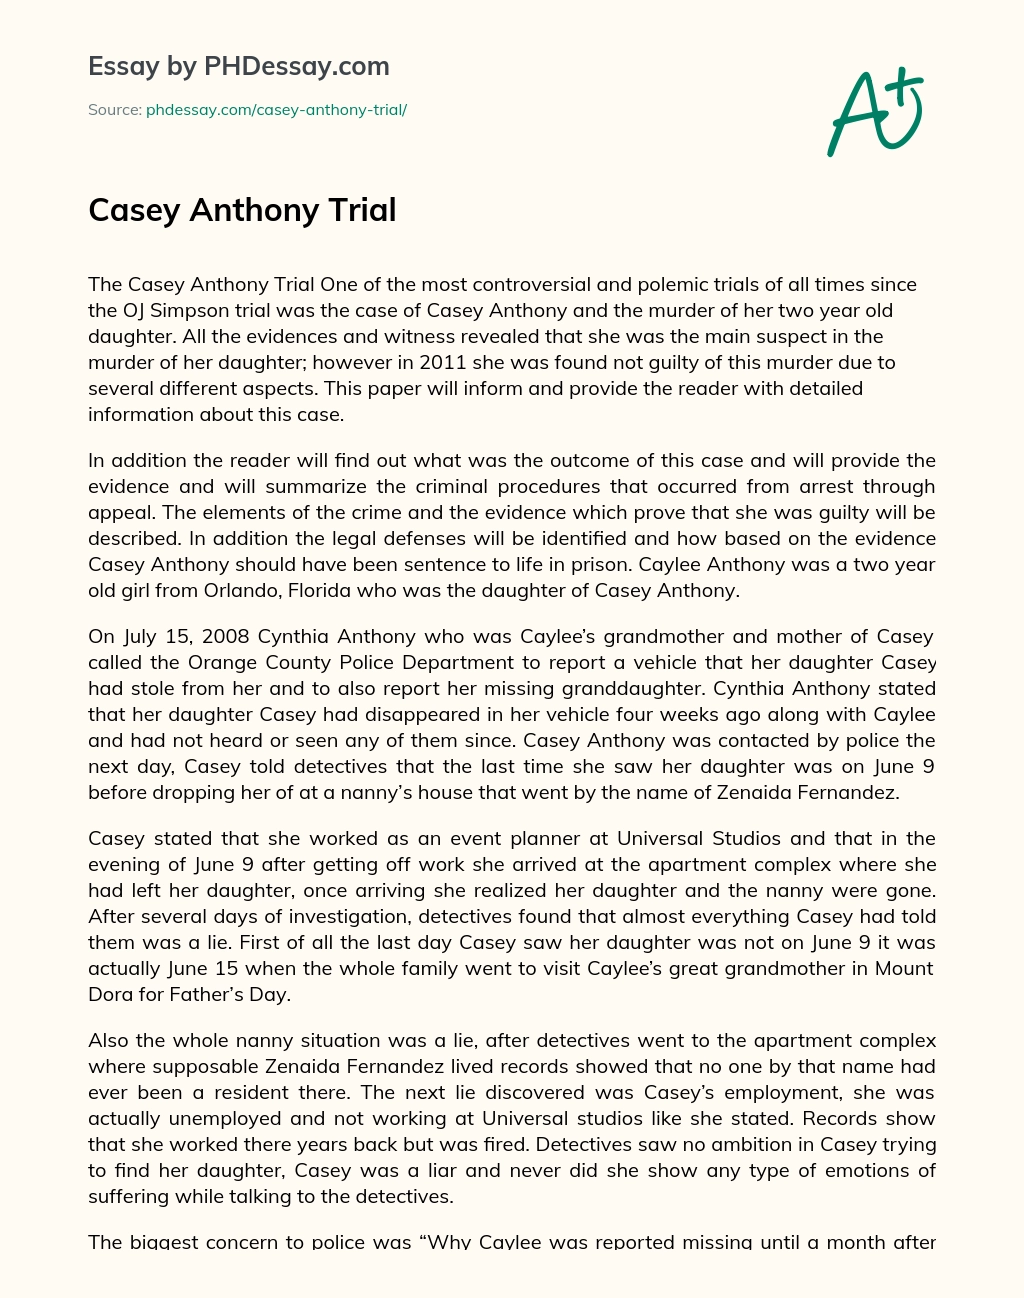 Casey Anthony Trial essay